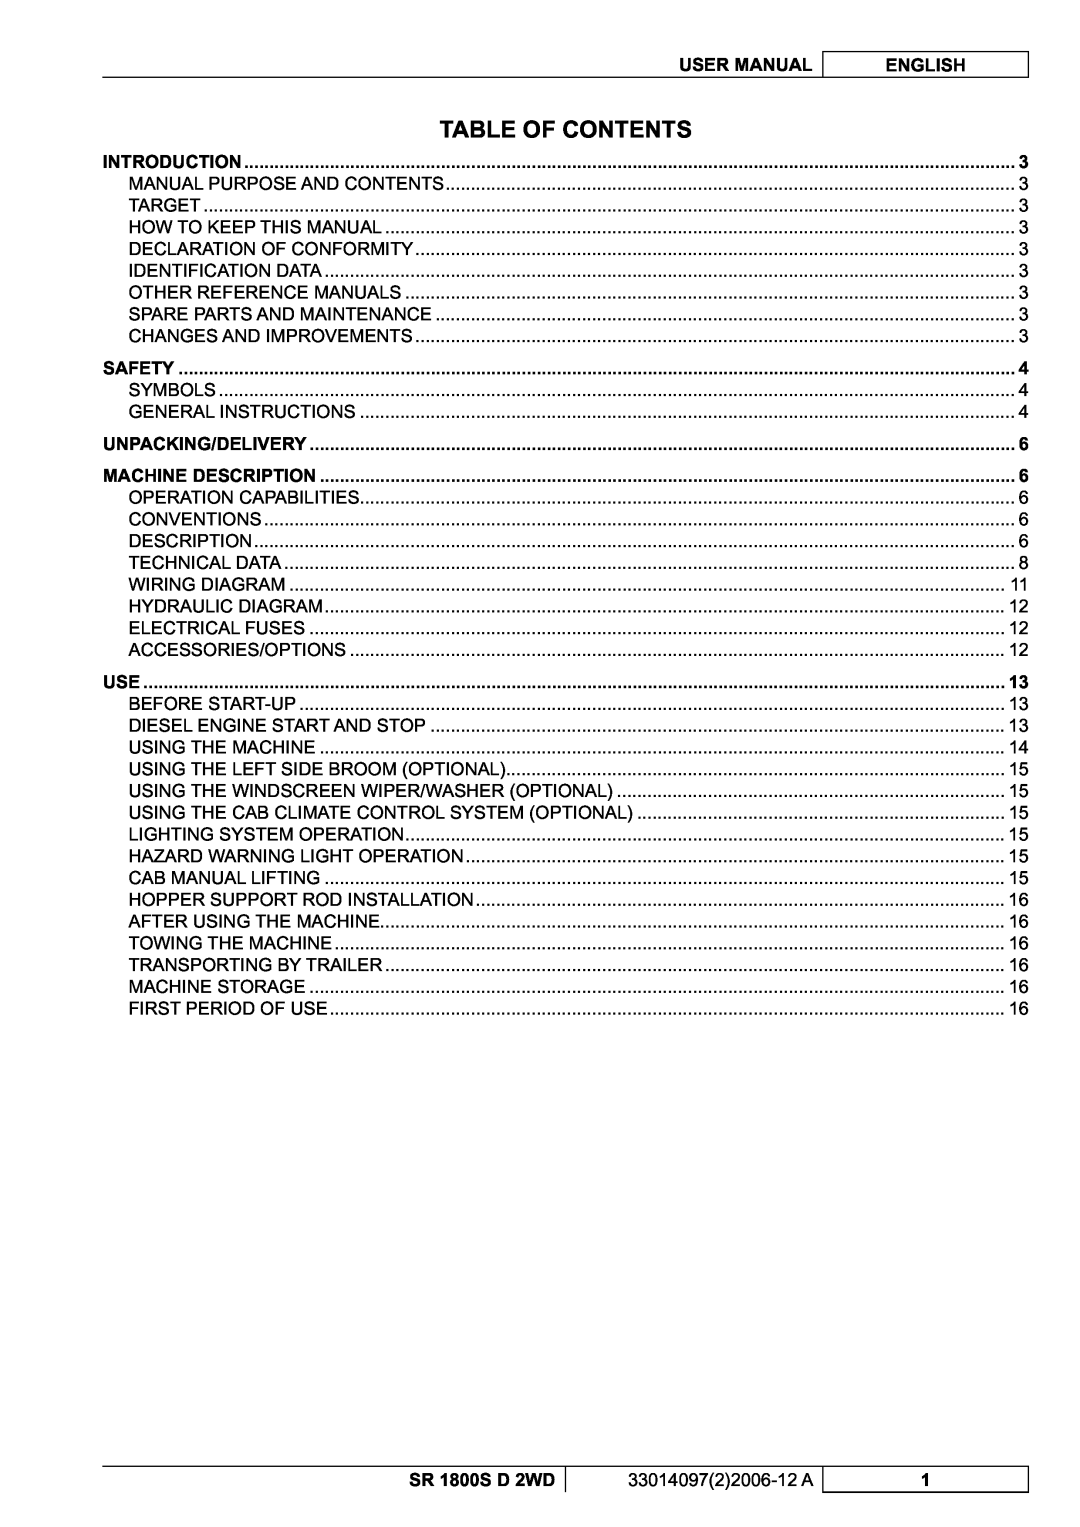 Nilfisk-Advance America SR 1800S 2WD manuel dutilisation Table Of Contents, User Manual, English, SR 1800S D 2WD 